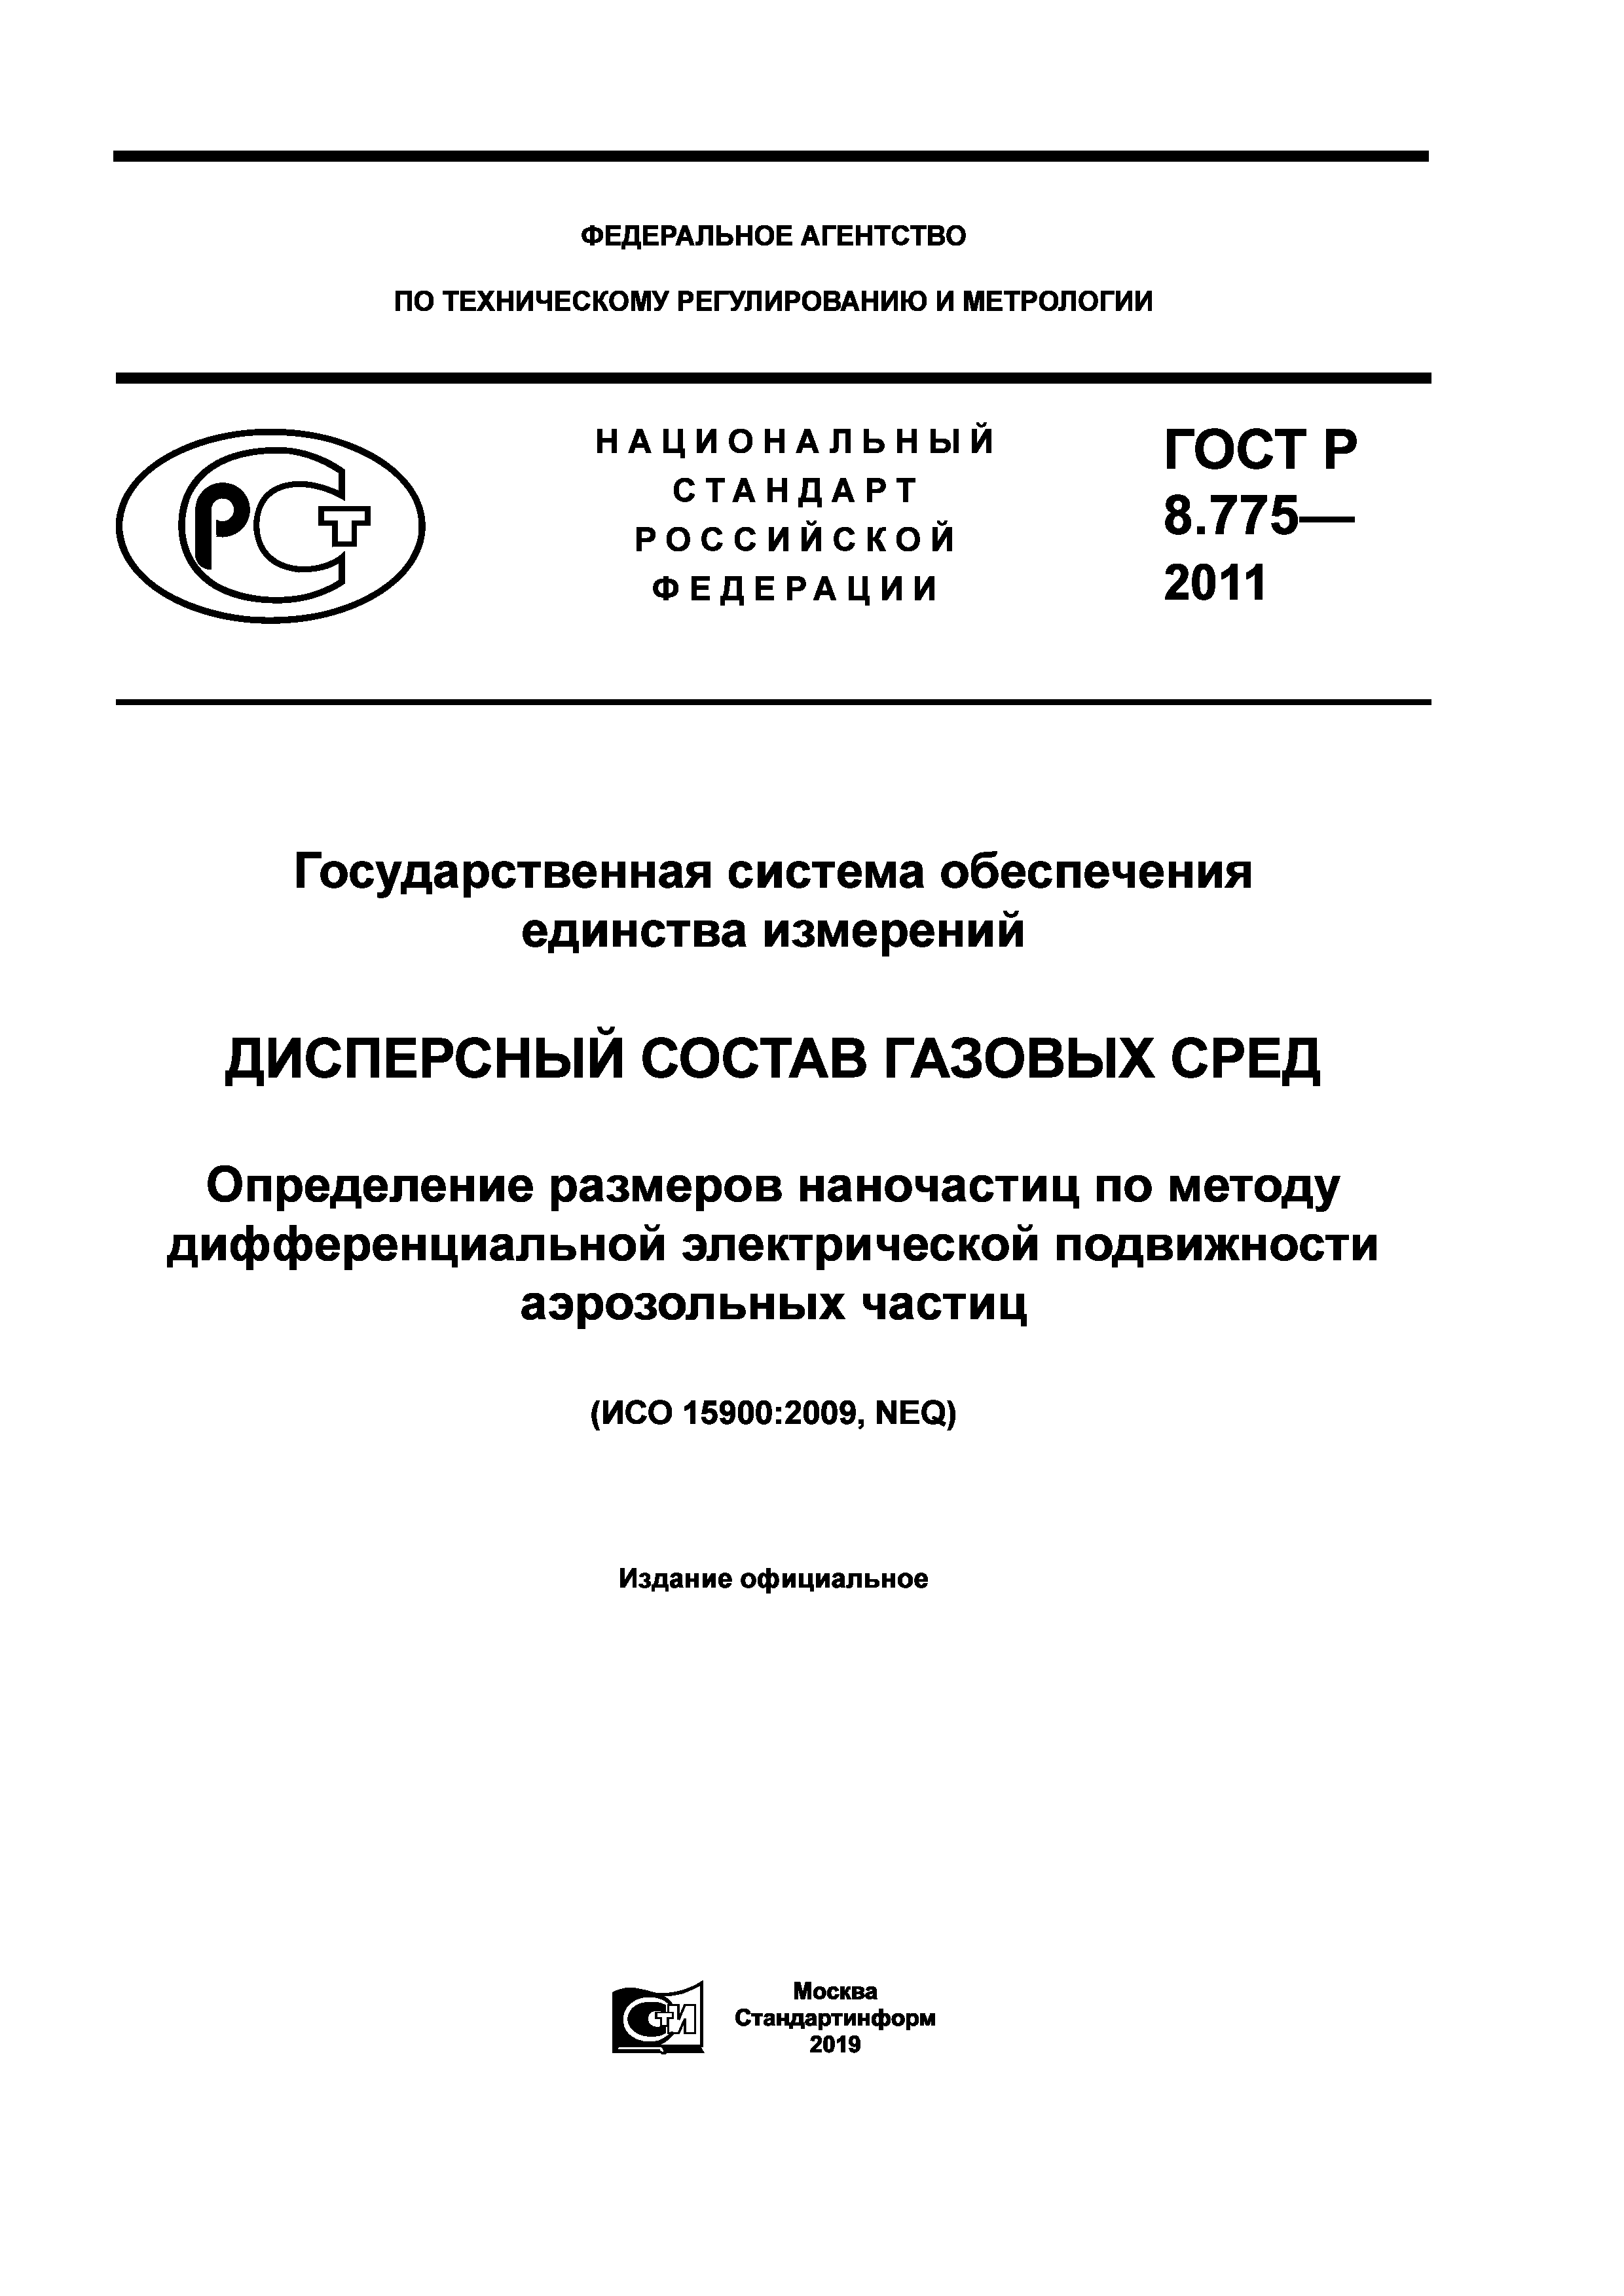 ГОСТ Р 8.775-2011